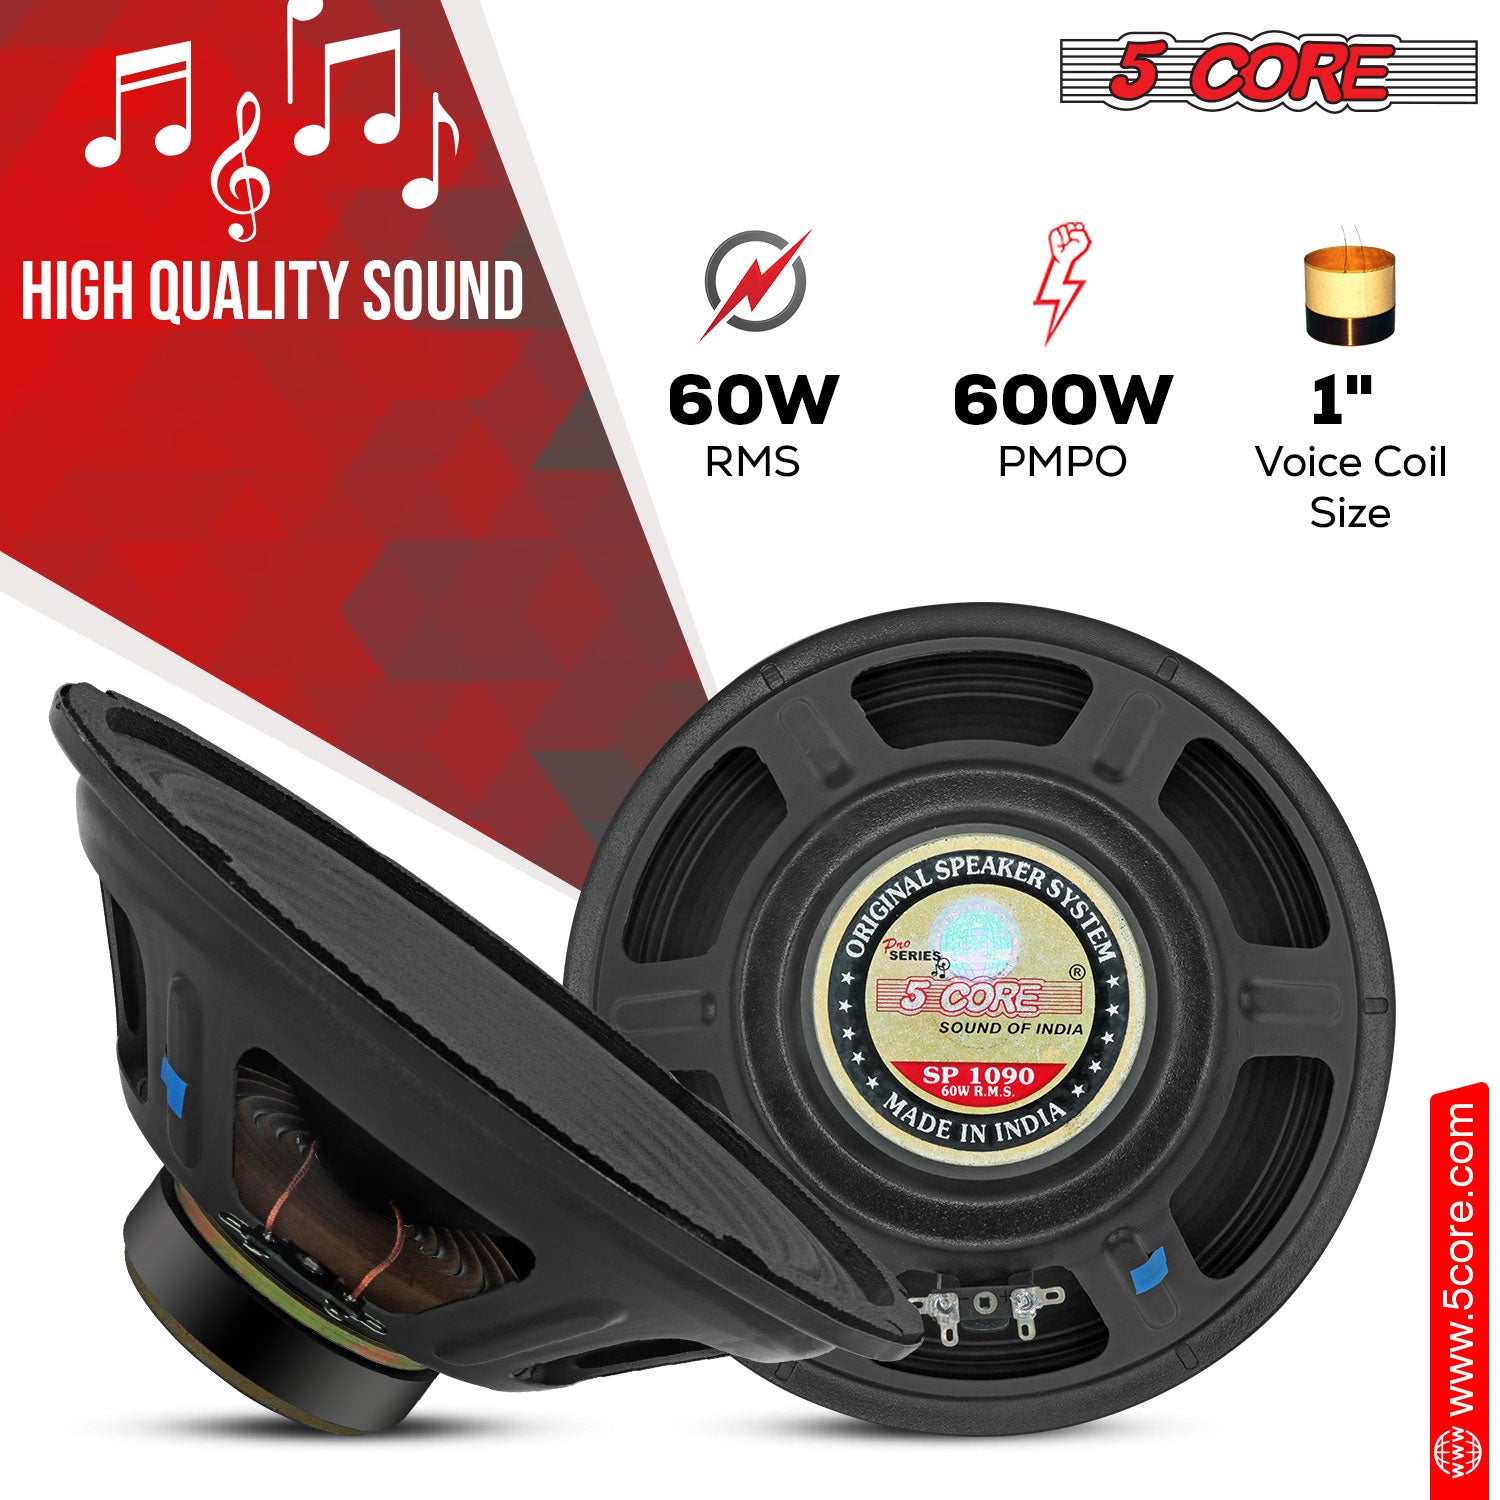 5 Core 10 Inch Subwoofer Car Audio Subwoofers 600W Peak 4 Ohm Replacement Car Bass Sub Woofer Speaker w 13 Oz Magnet